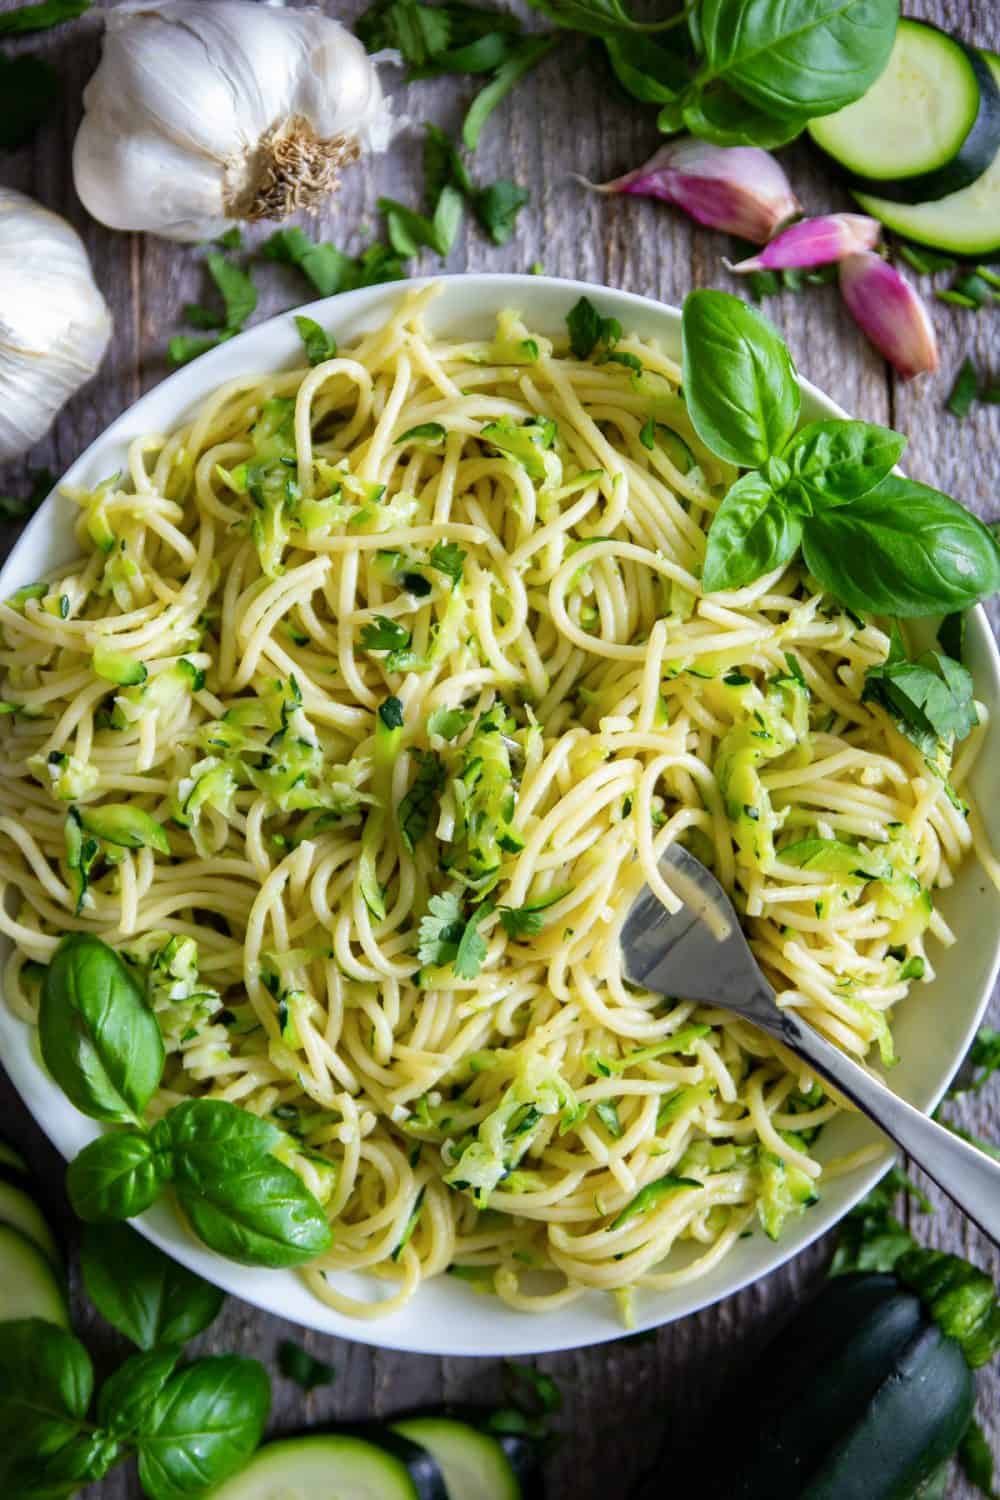 https://simplyhomecooked.com/wp-content/uploads/2018/08/spaghetti-with-zucchini-and-garlic-7.jpg